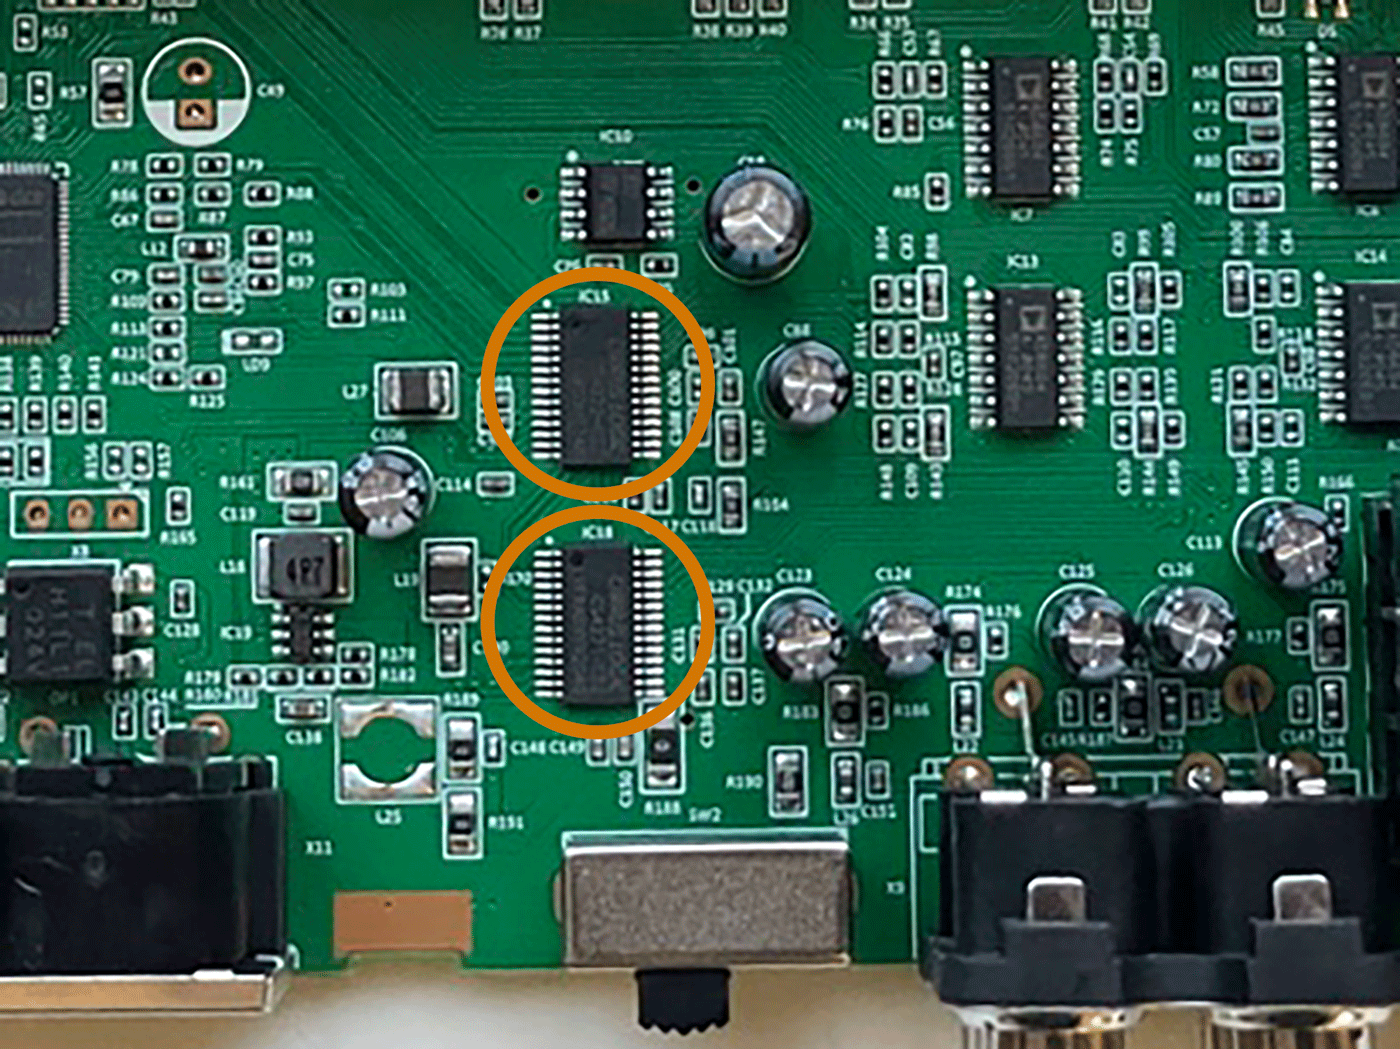 Cirrus Logic digital analogue convertors inside the UMC204HD